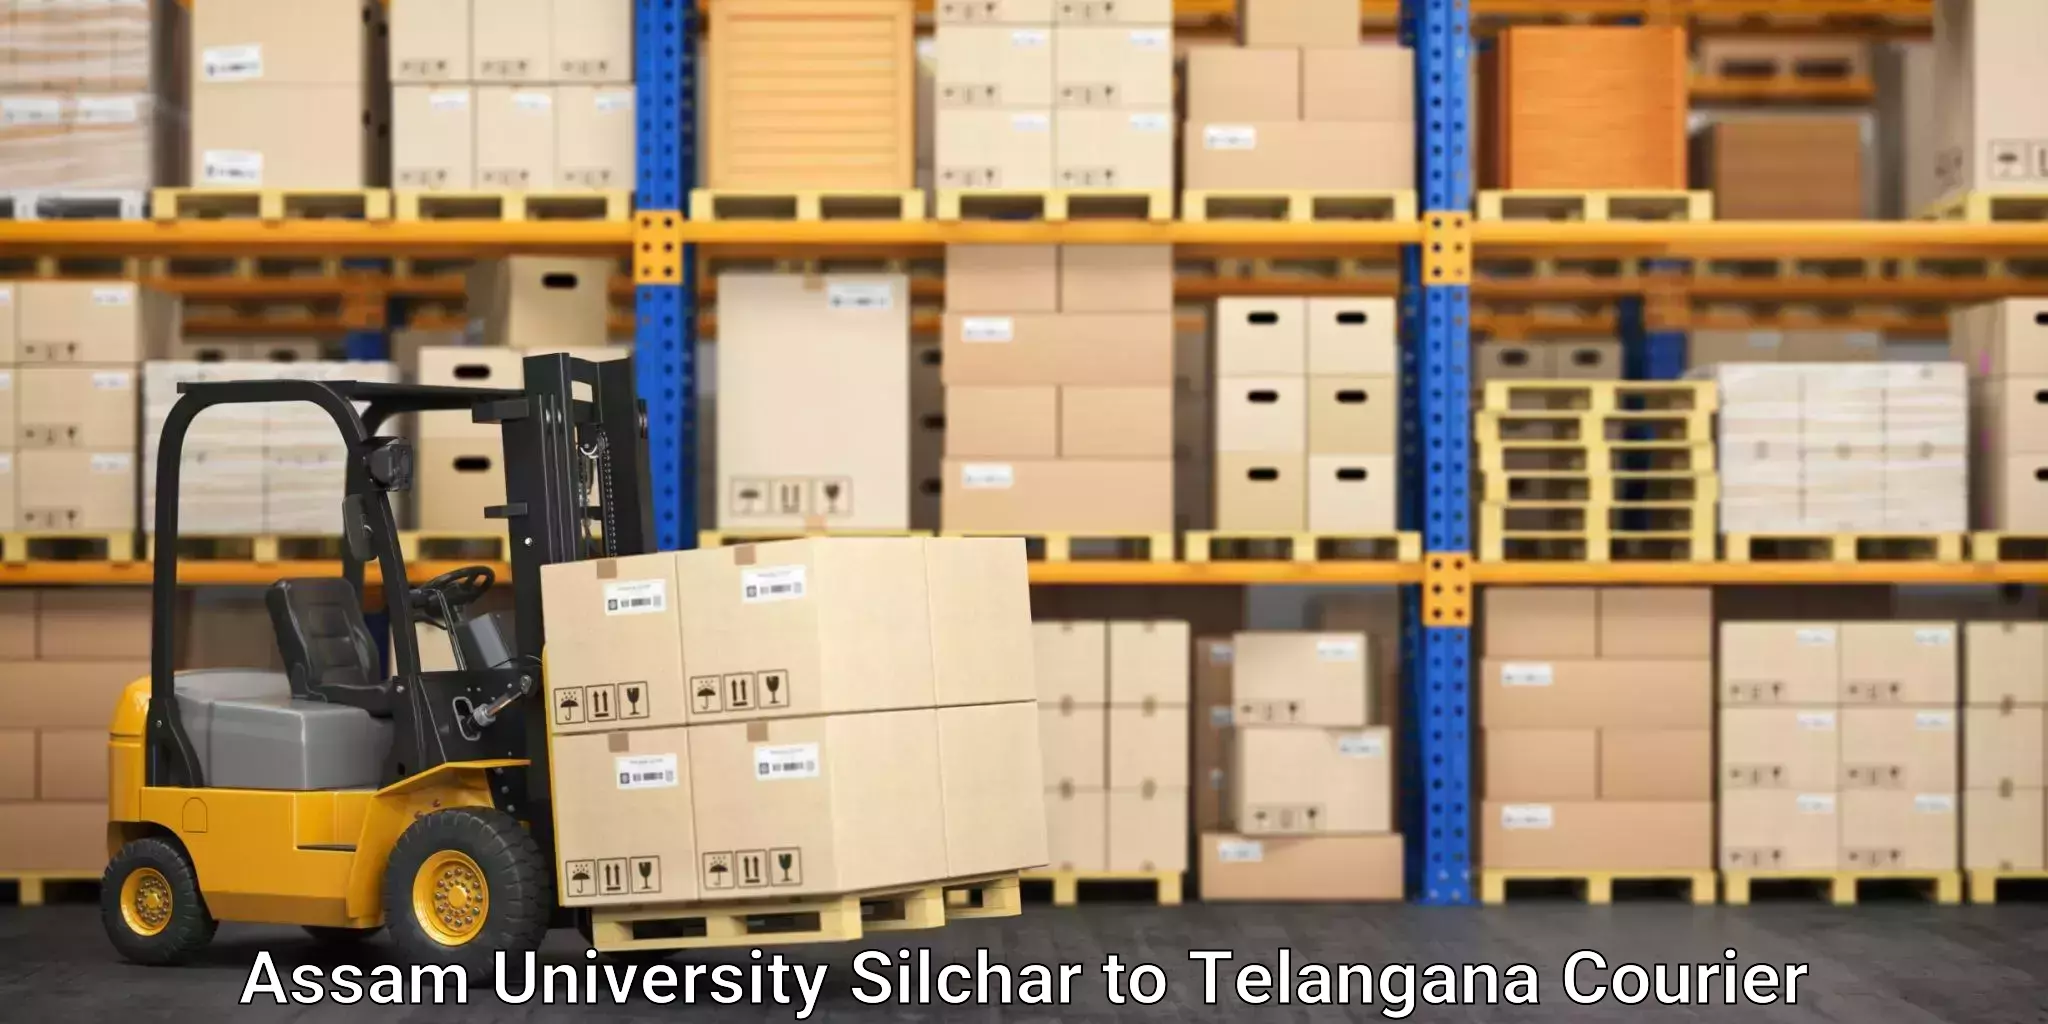 Courier service efficiency Assam University Silchar to Sirikonda